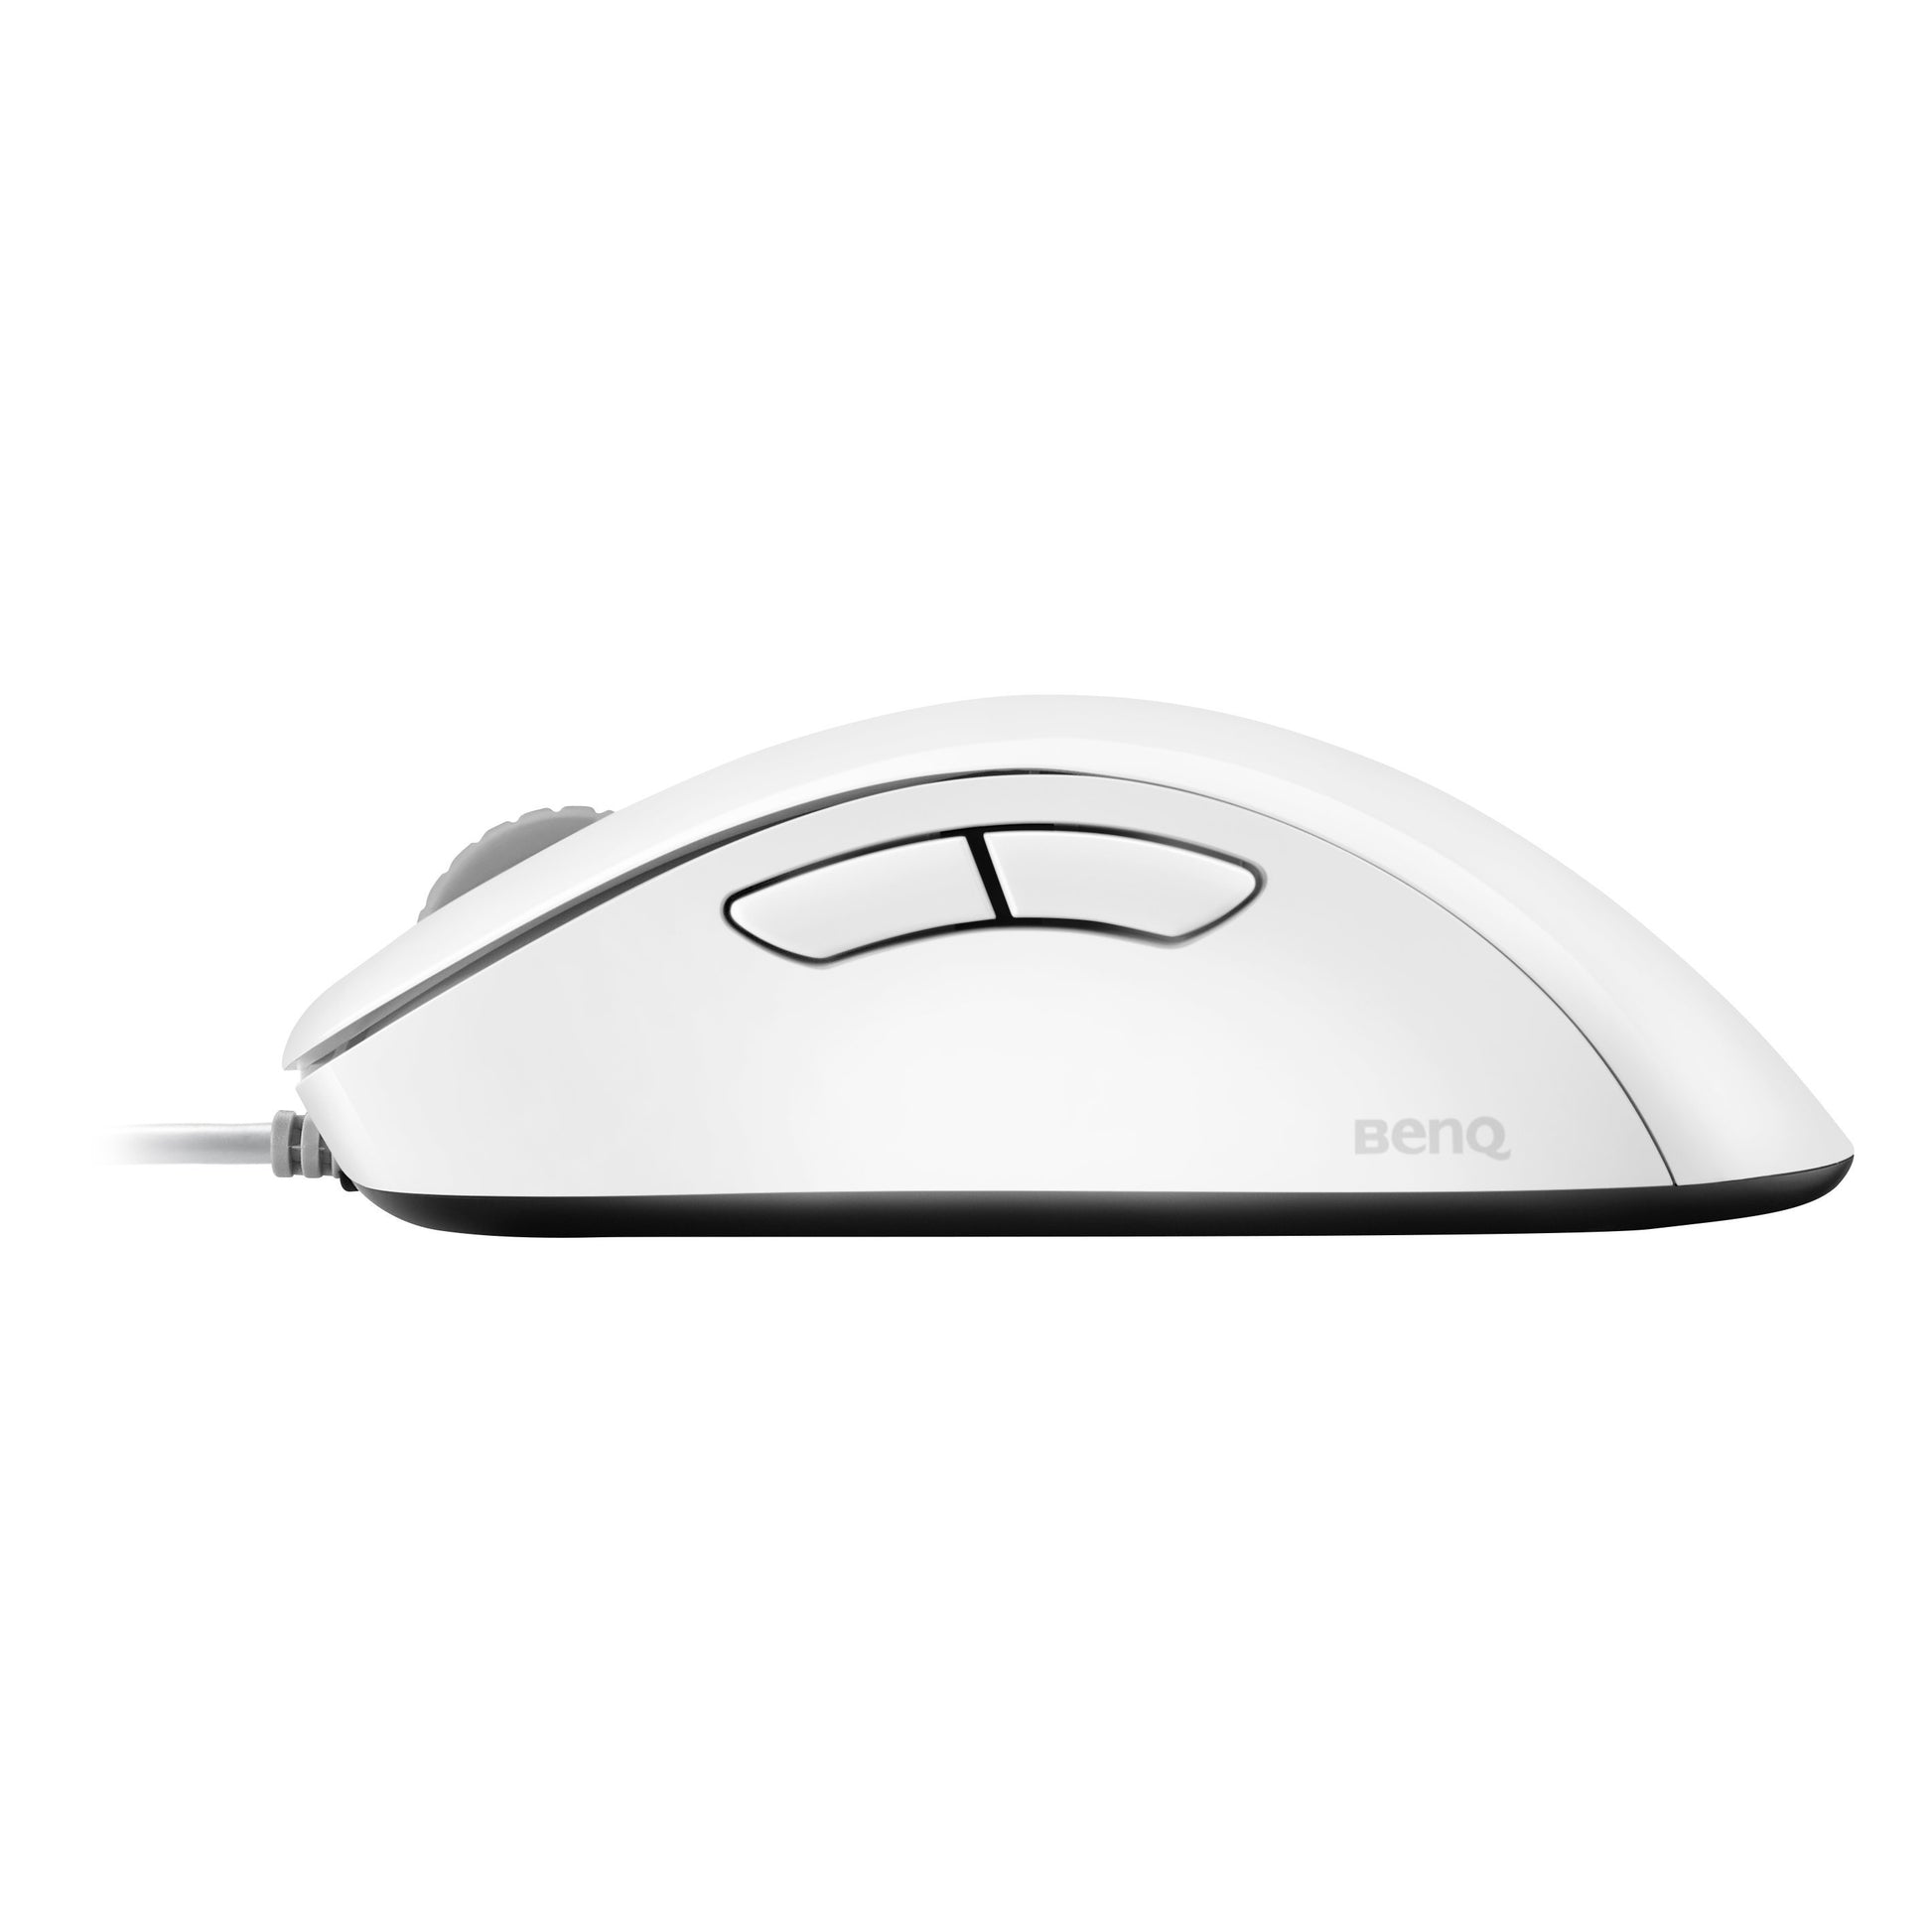 ZOWIE EC1 White eSports Mouse-Addice Inc